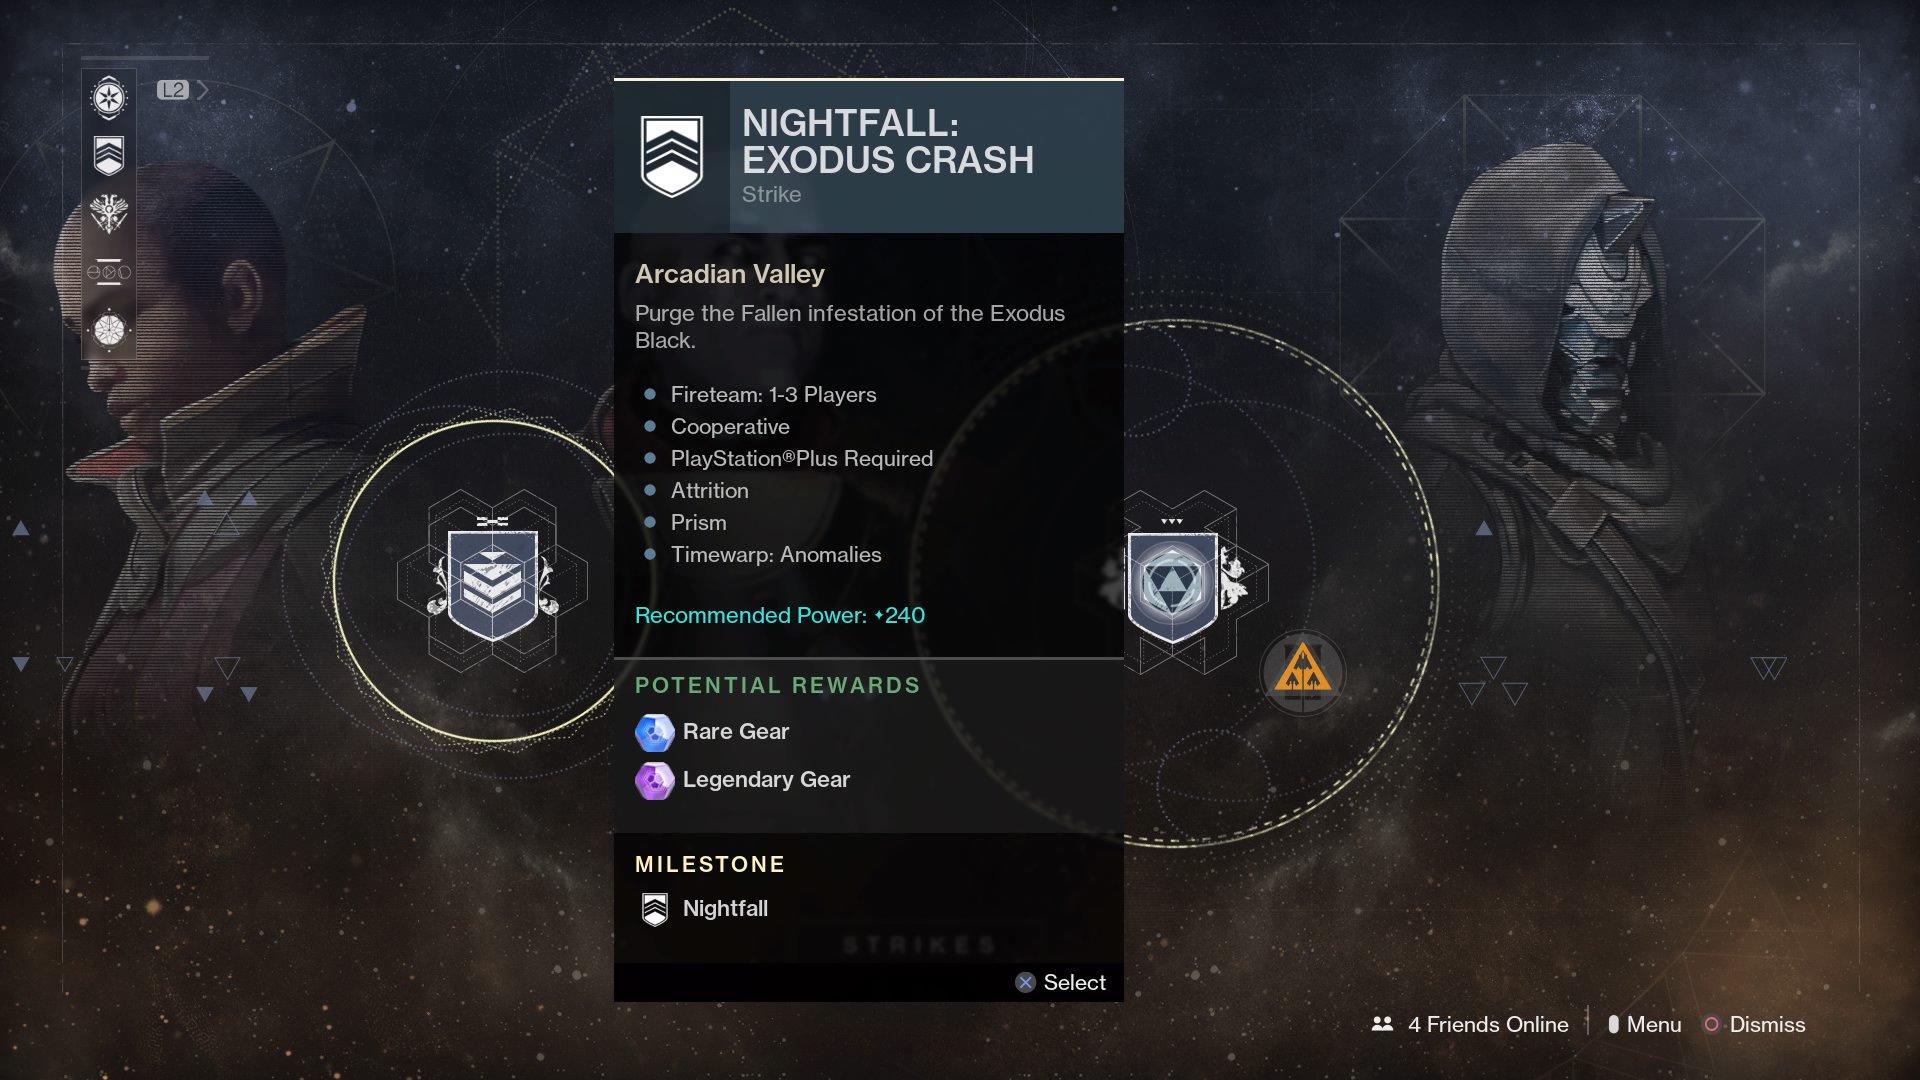 Destiny 2 Exodus Crash Nightfall Strike Guide - Prism, Timewarp ...